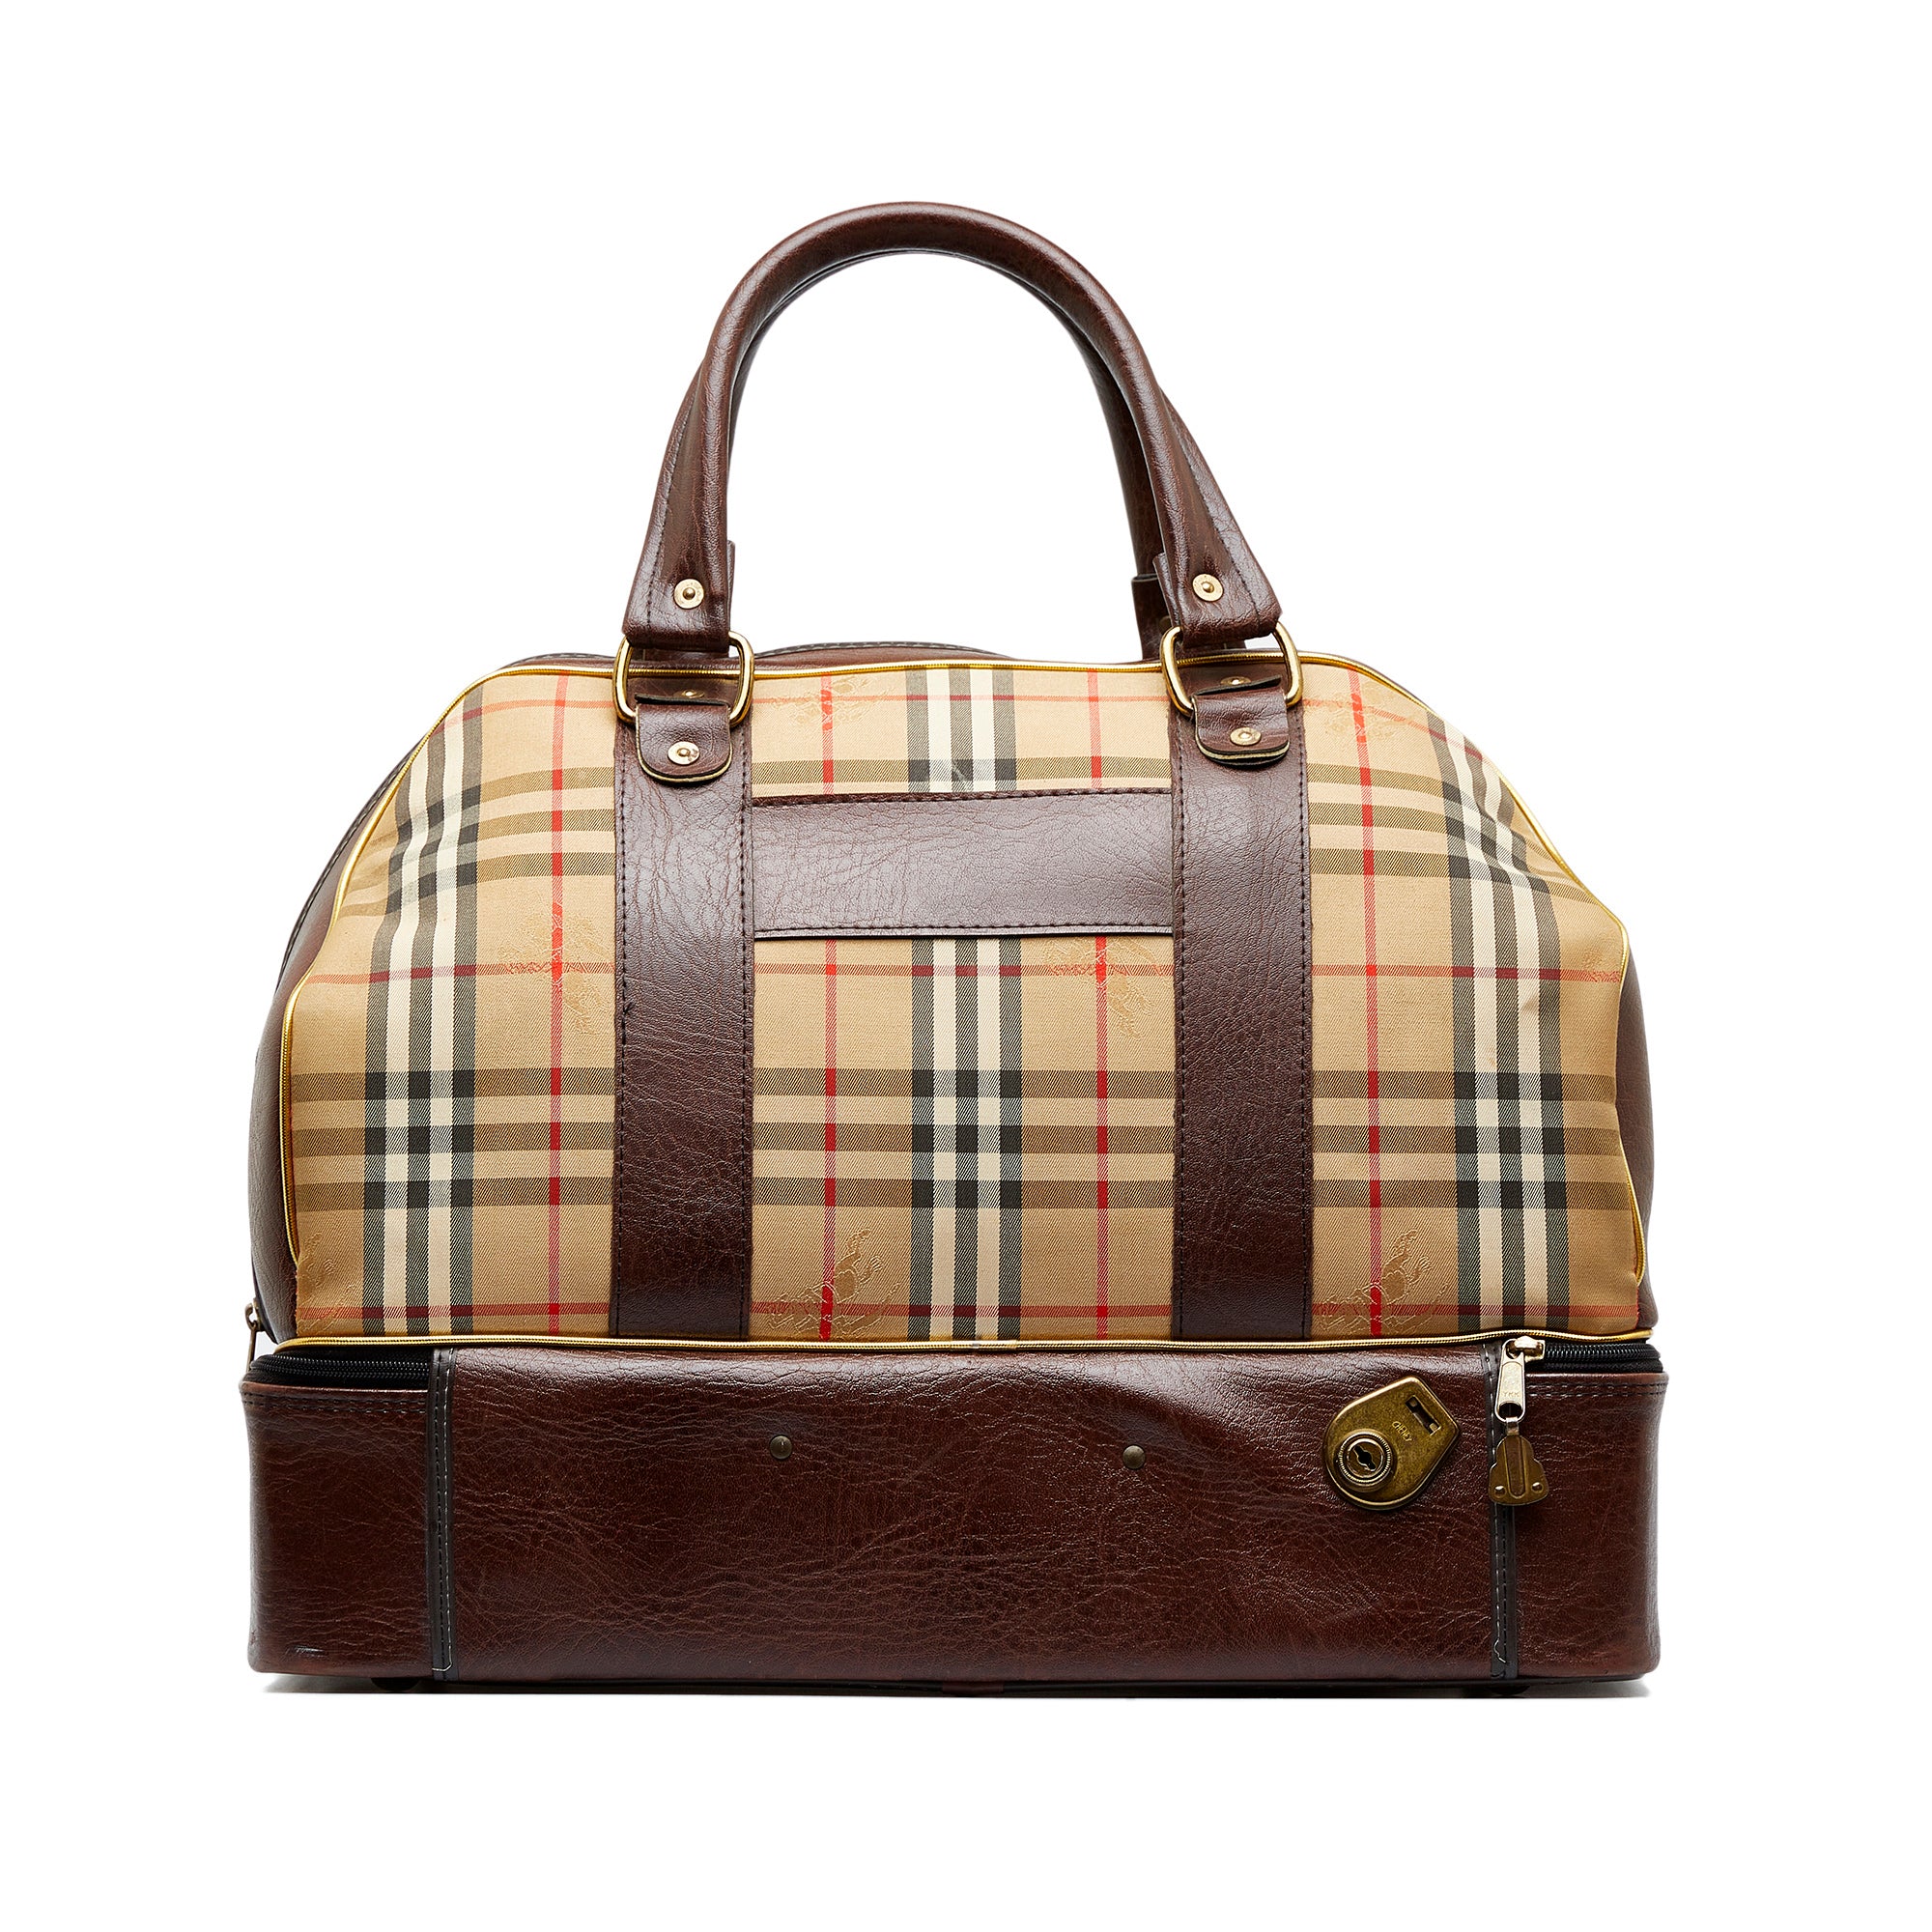 Burberry Haymarket Check Vintage Shoulder Handbag Buckle Flap